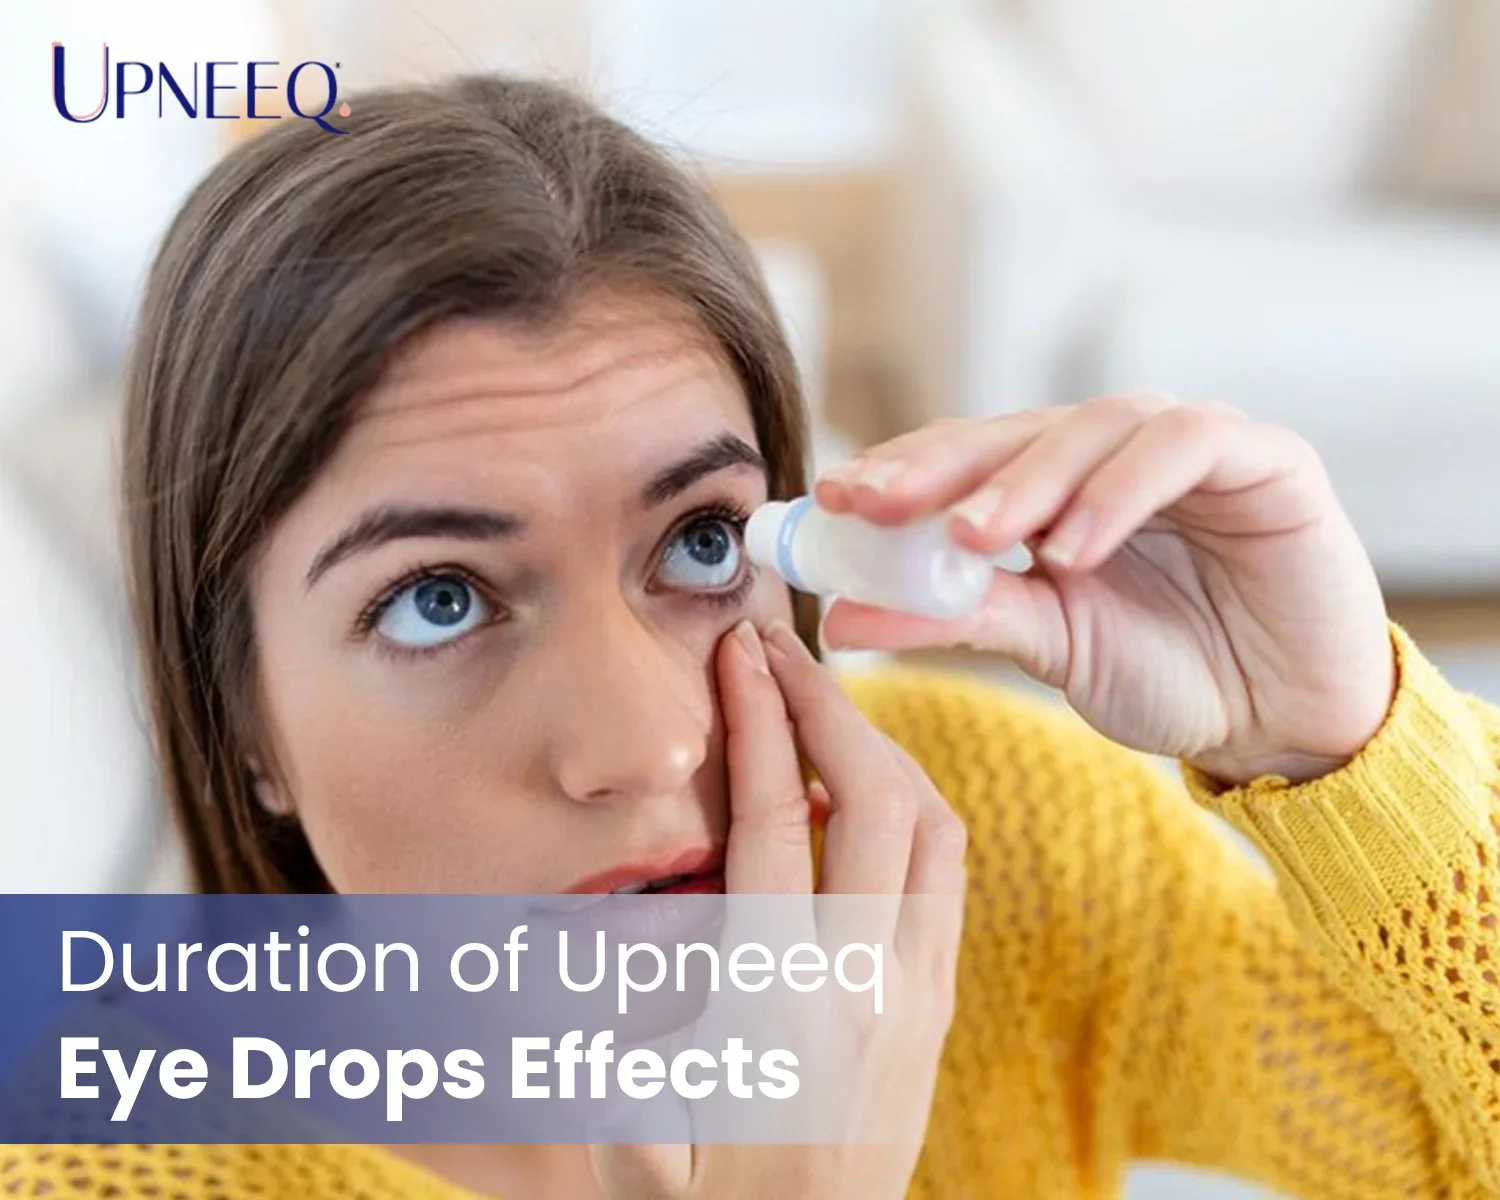 Duration of Upneeq Eye Drops Effects